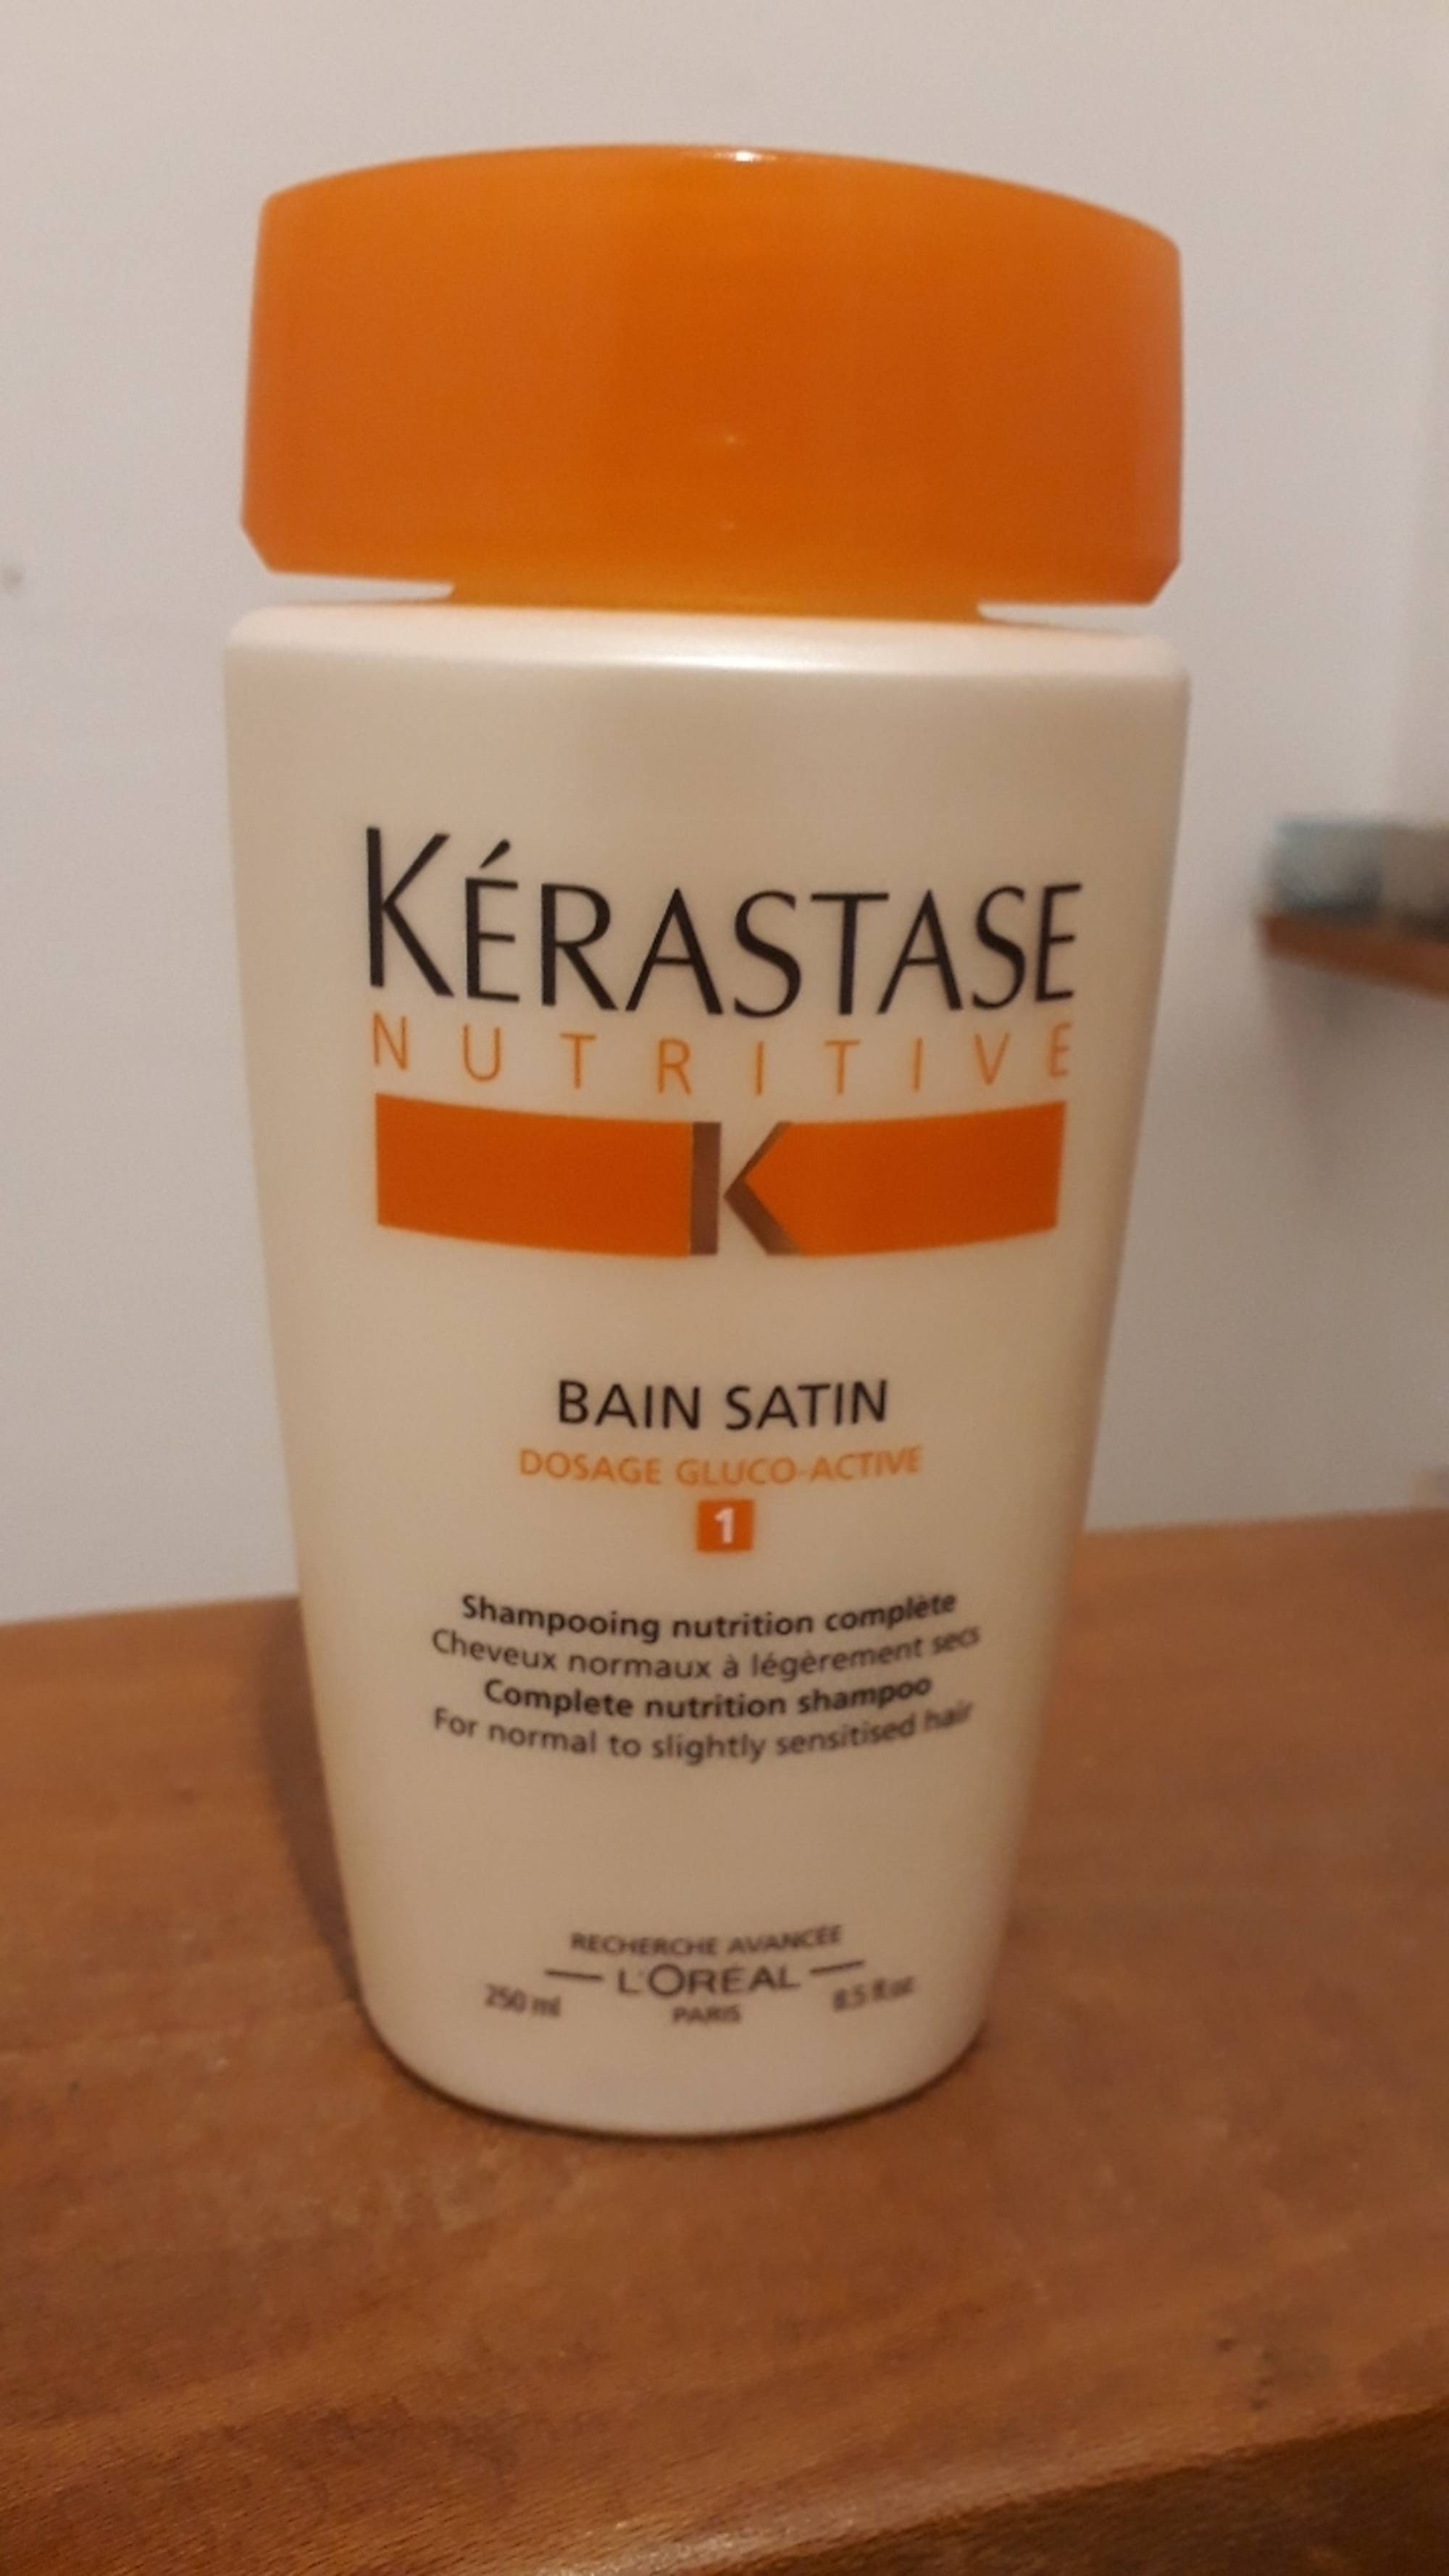 KÉRASTASE - Nutritive - Bain satin 1 - Shampooing nutrition complète